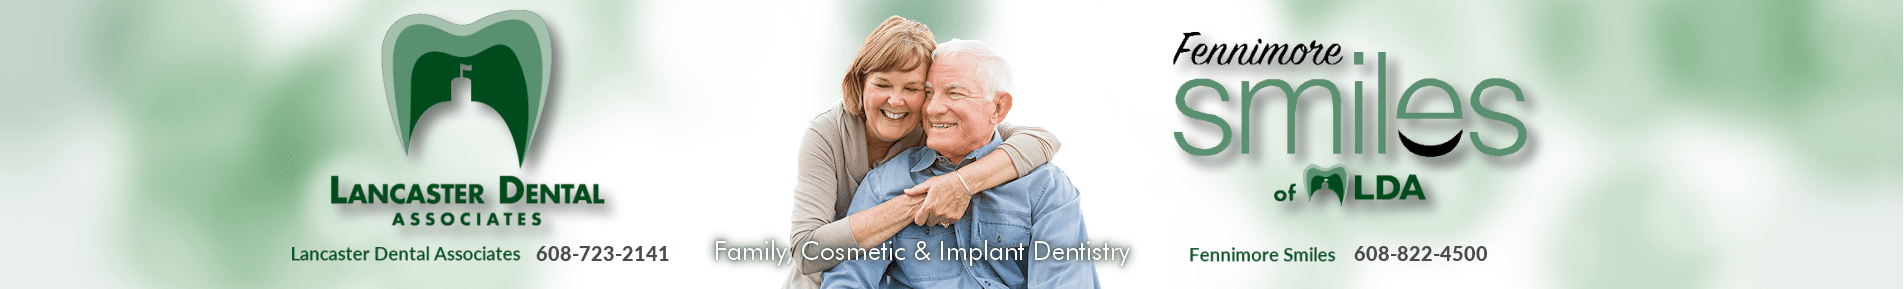 Lancaster Dental Associates and Fennimore Smiles